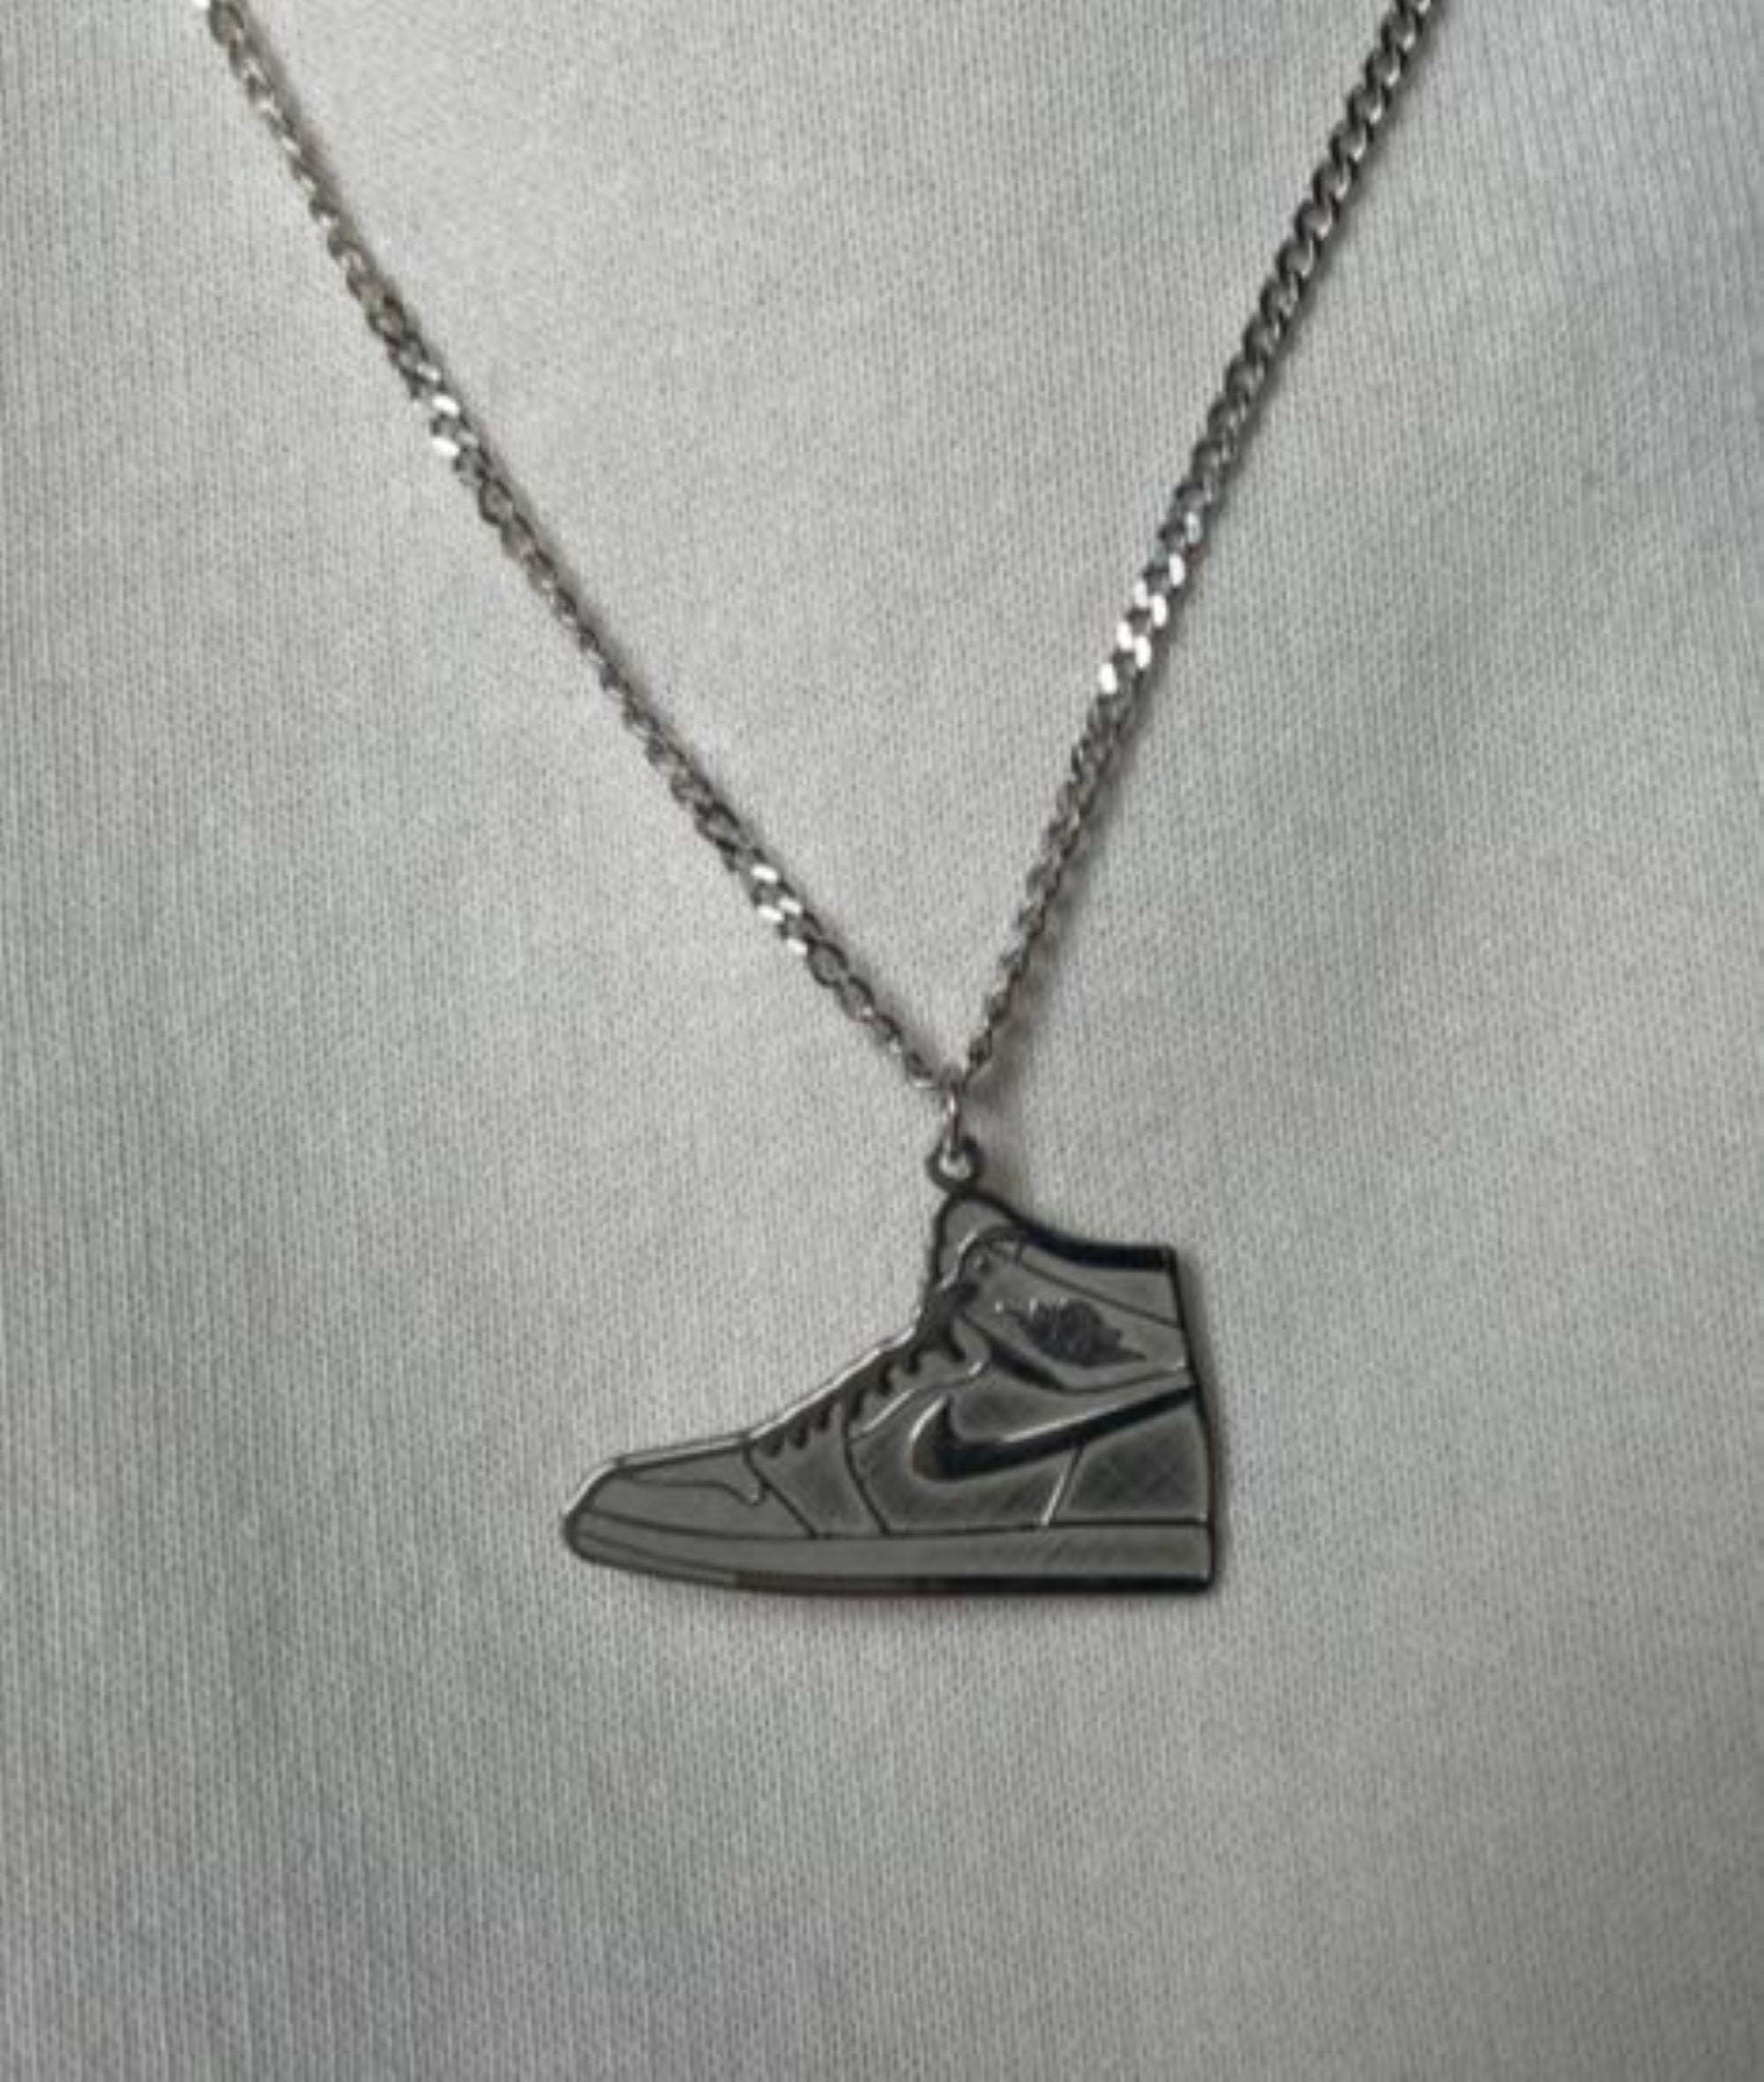 Nike Necklace 